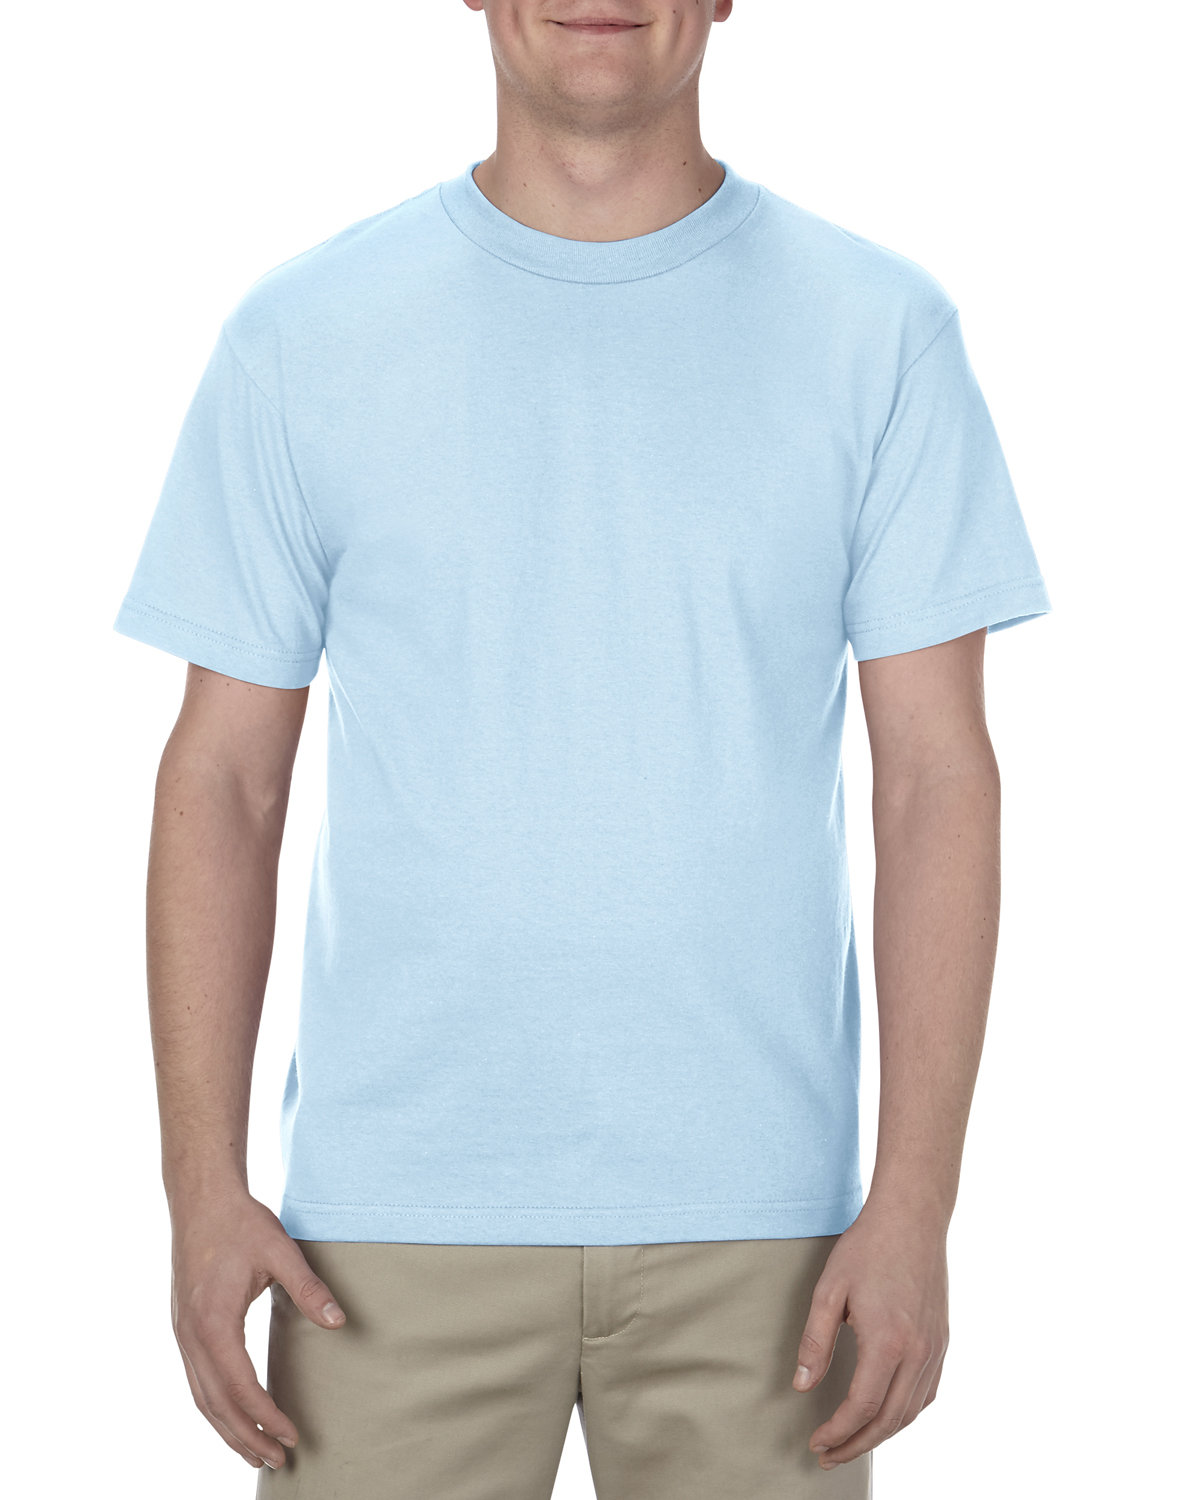 American Apparel Adult 6.0 oz., 100% Cotton T-Shirt POWDER BLUE 